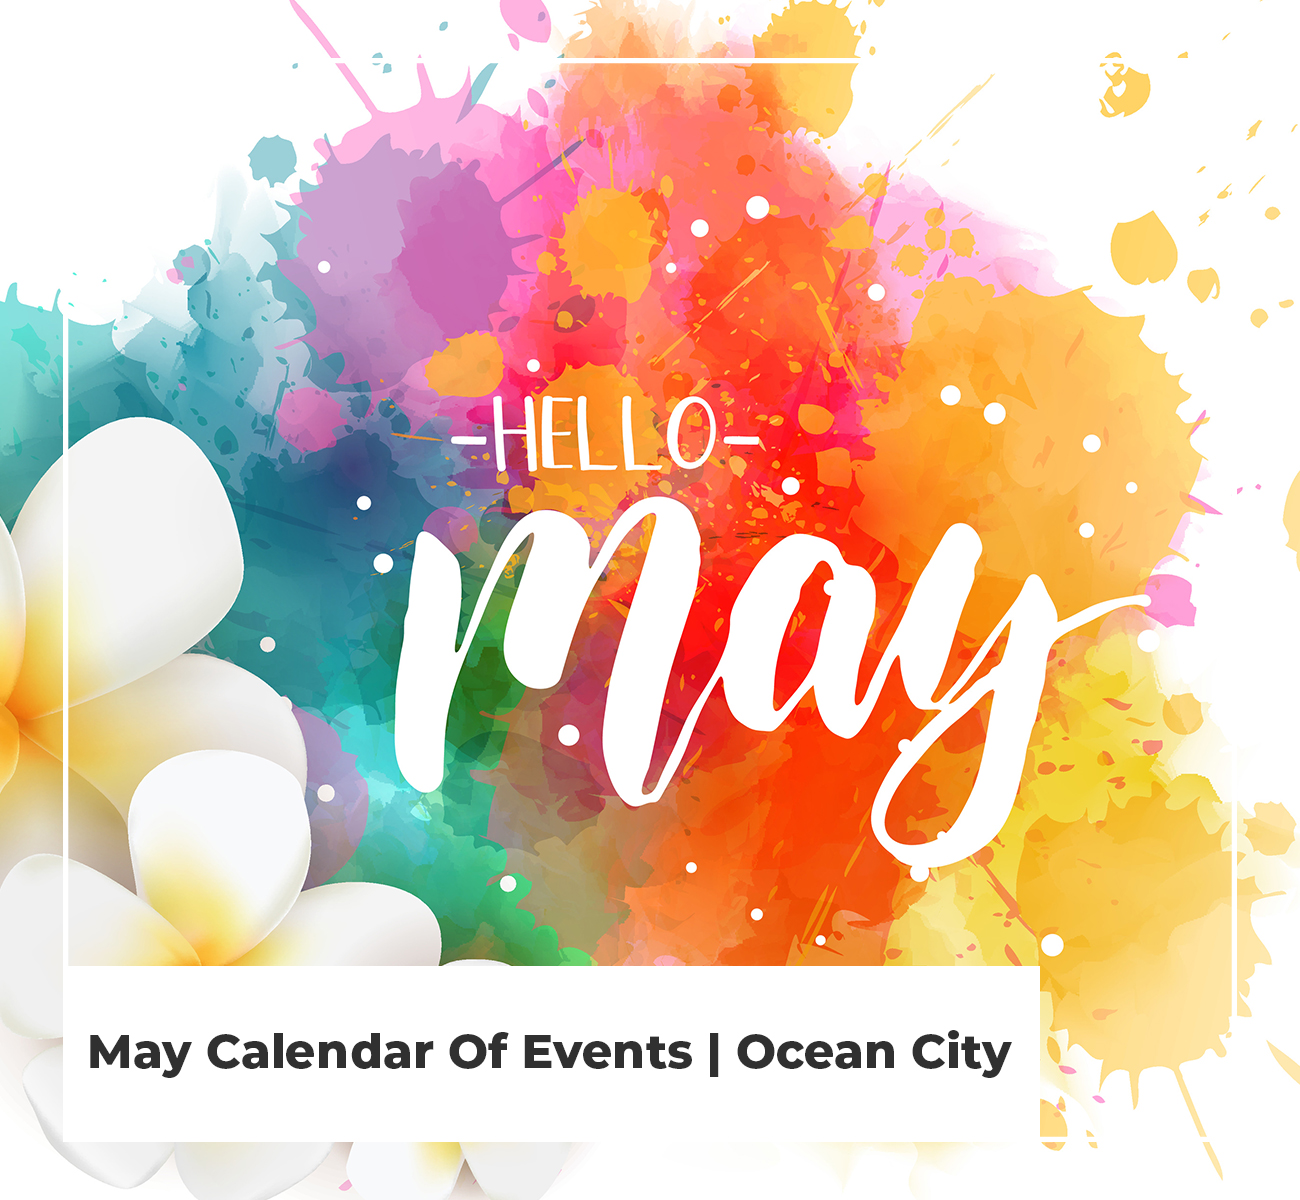 May Calendar Of Events | Ocean City